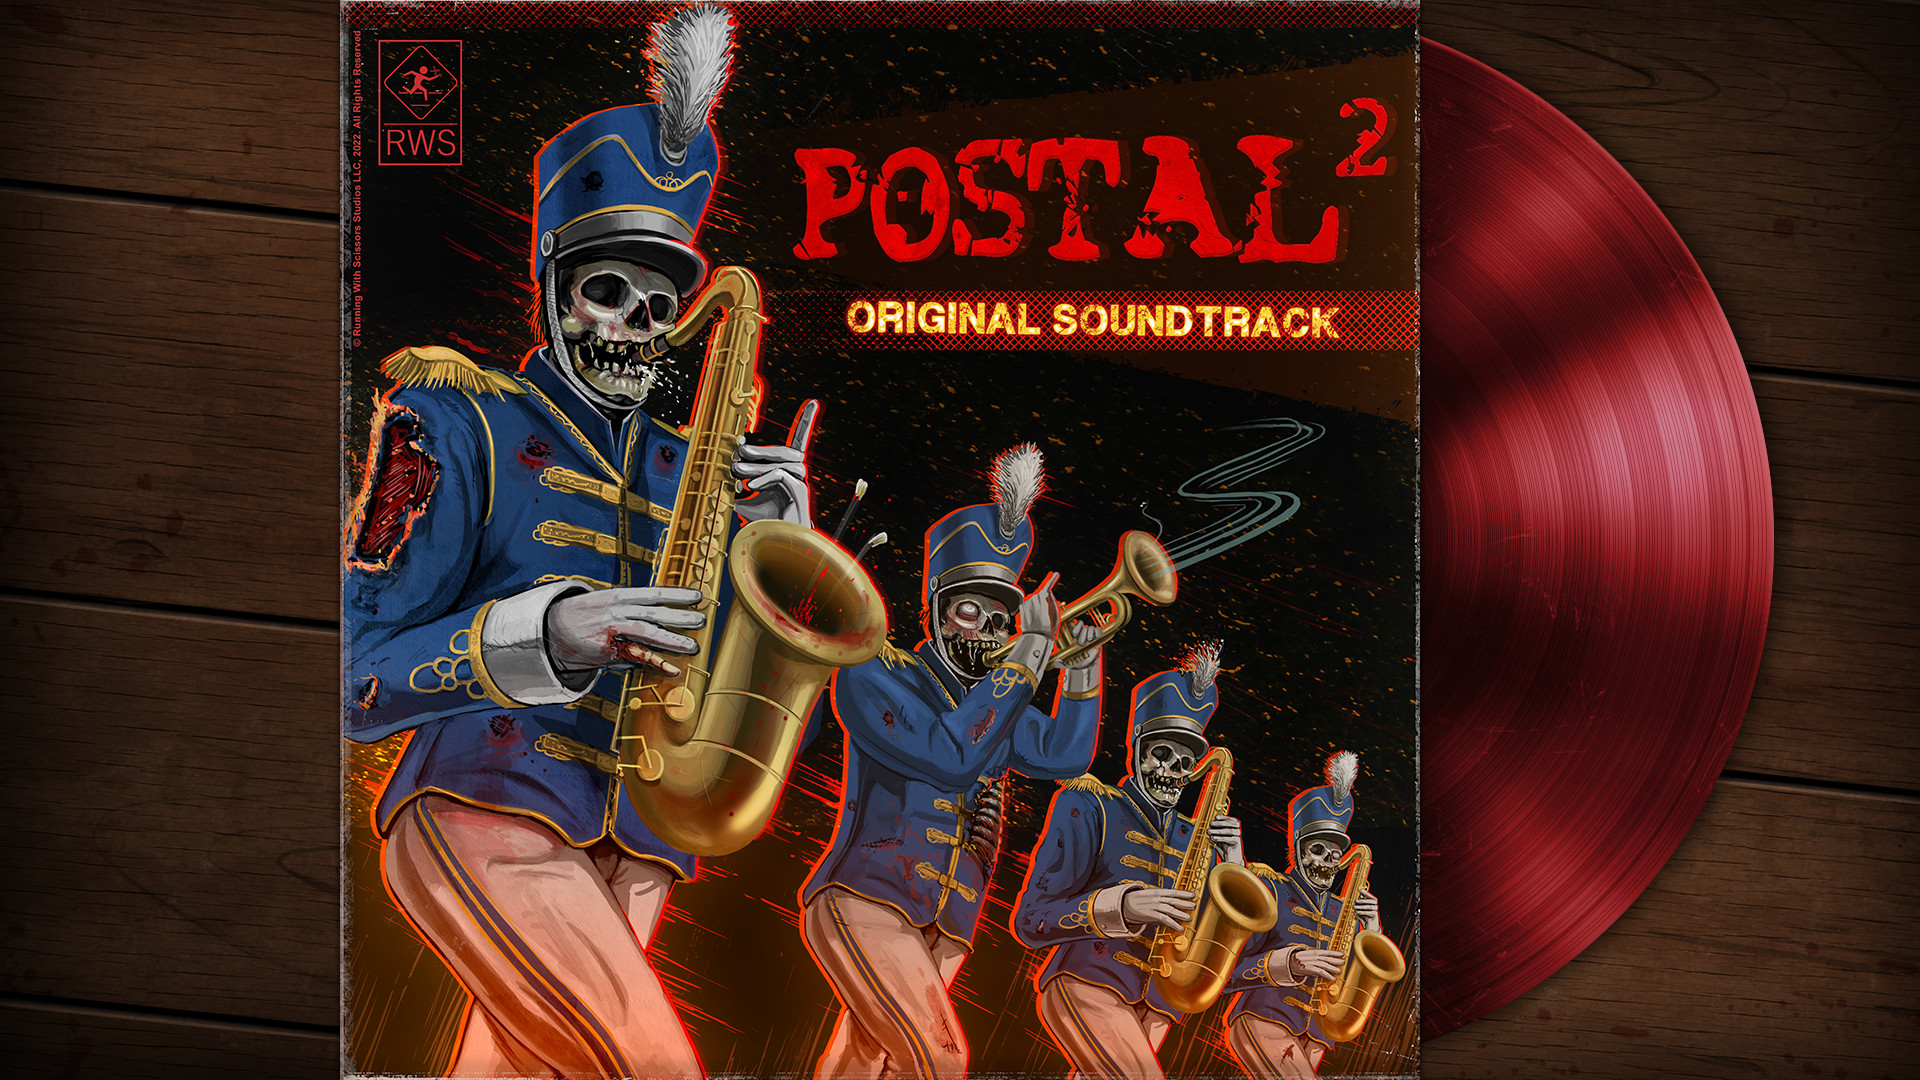 POSTAL 2 - Official Soundtrack Featured Screenshot #1